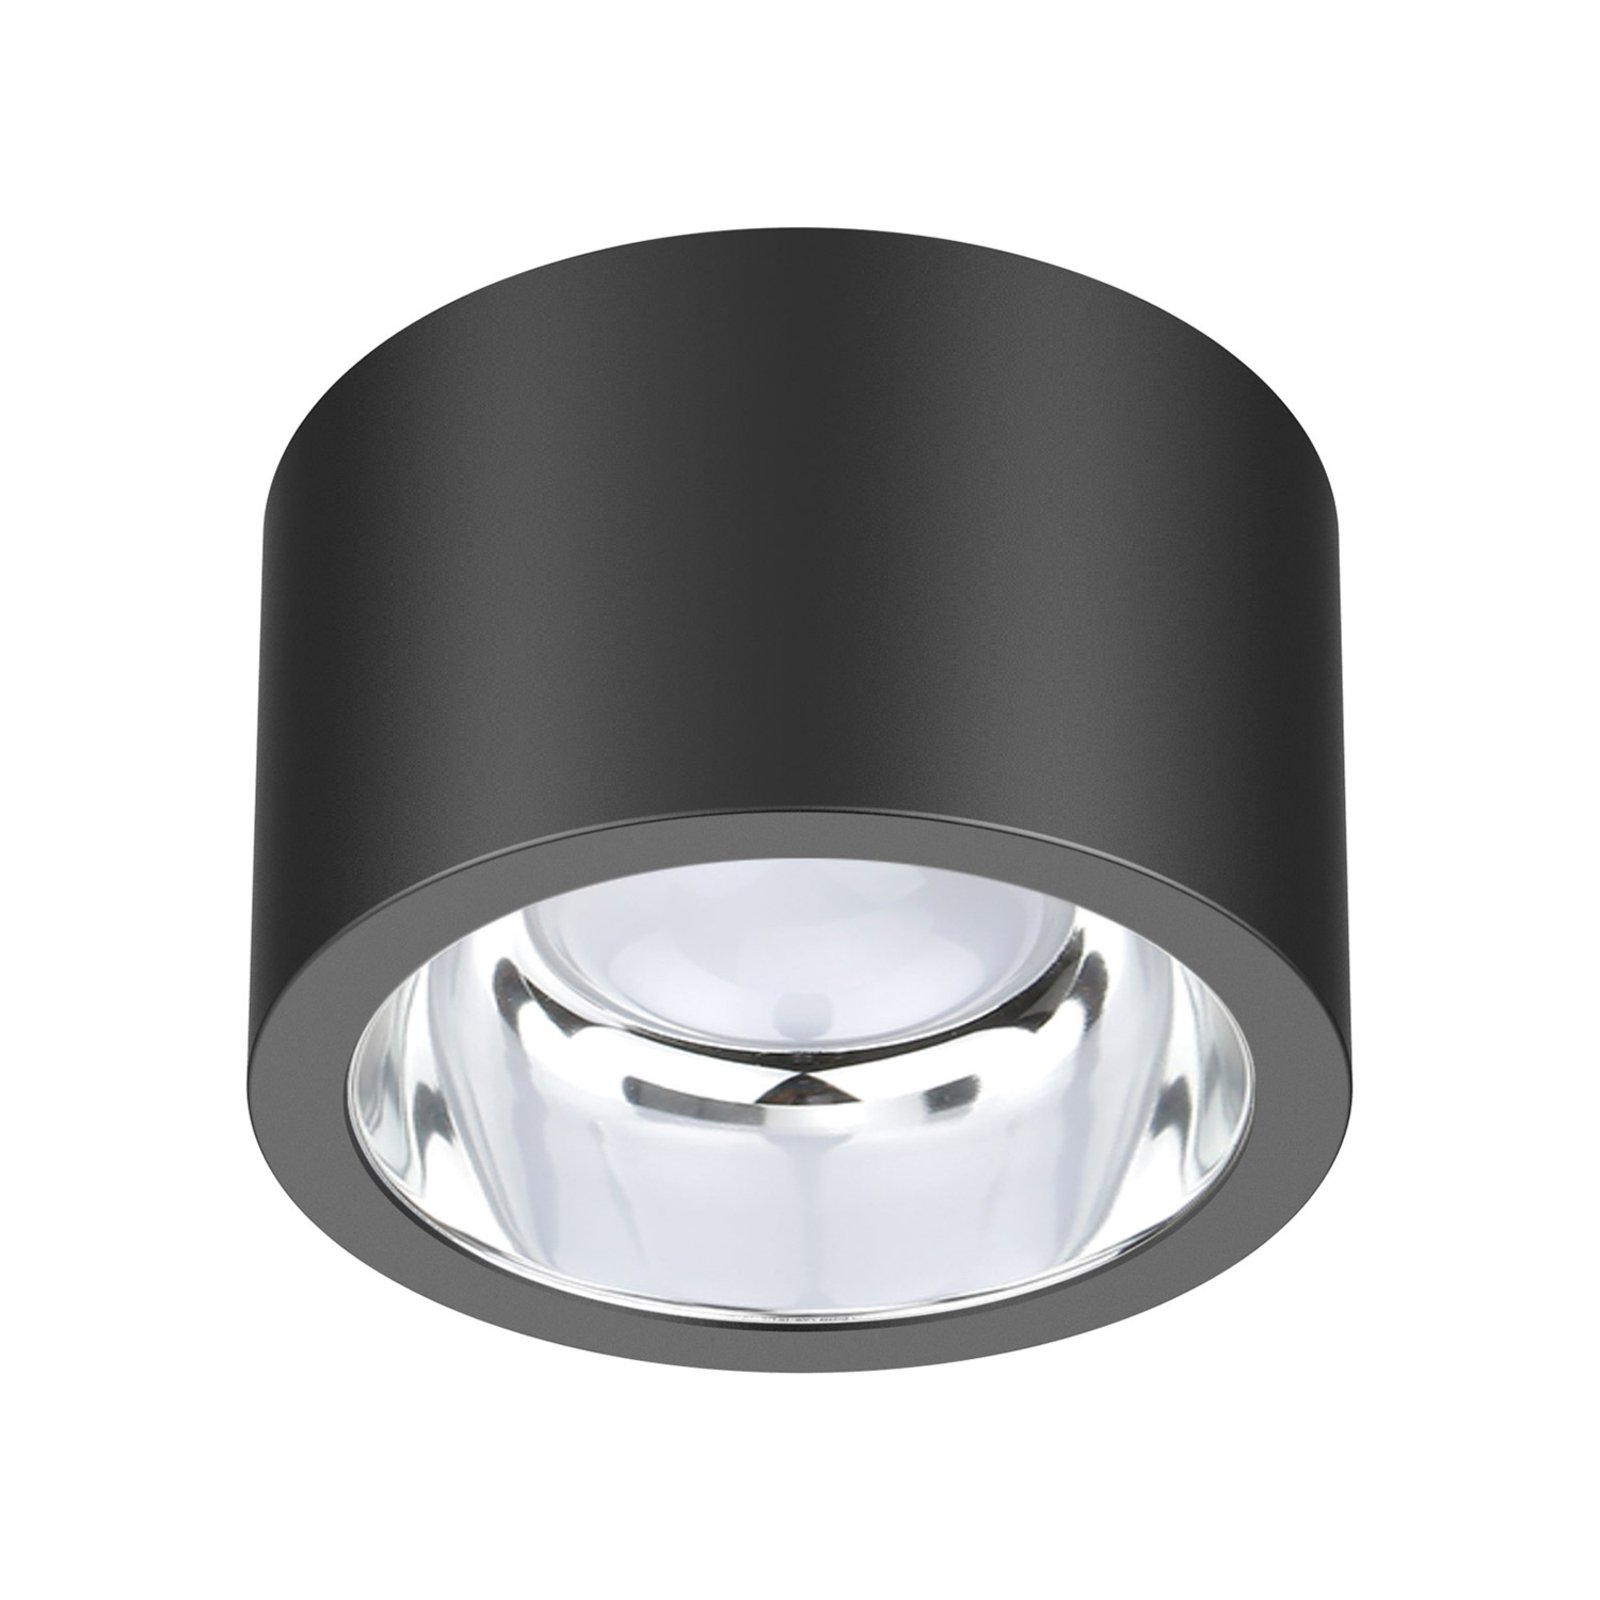 LED plafondspot ALG54, Ø 21,3 cm antraciet